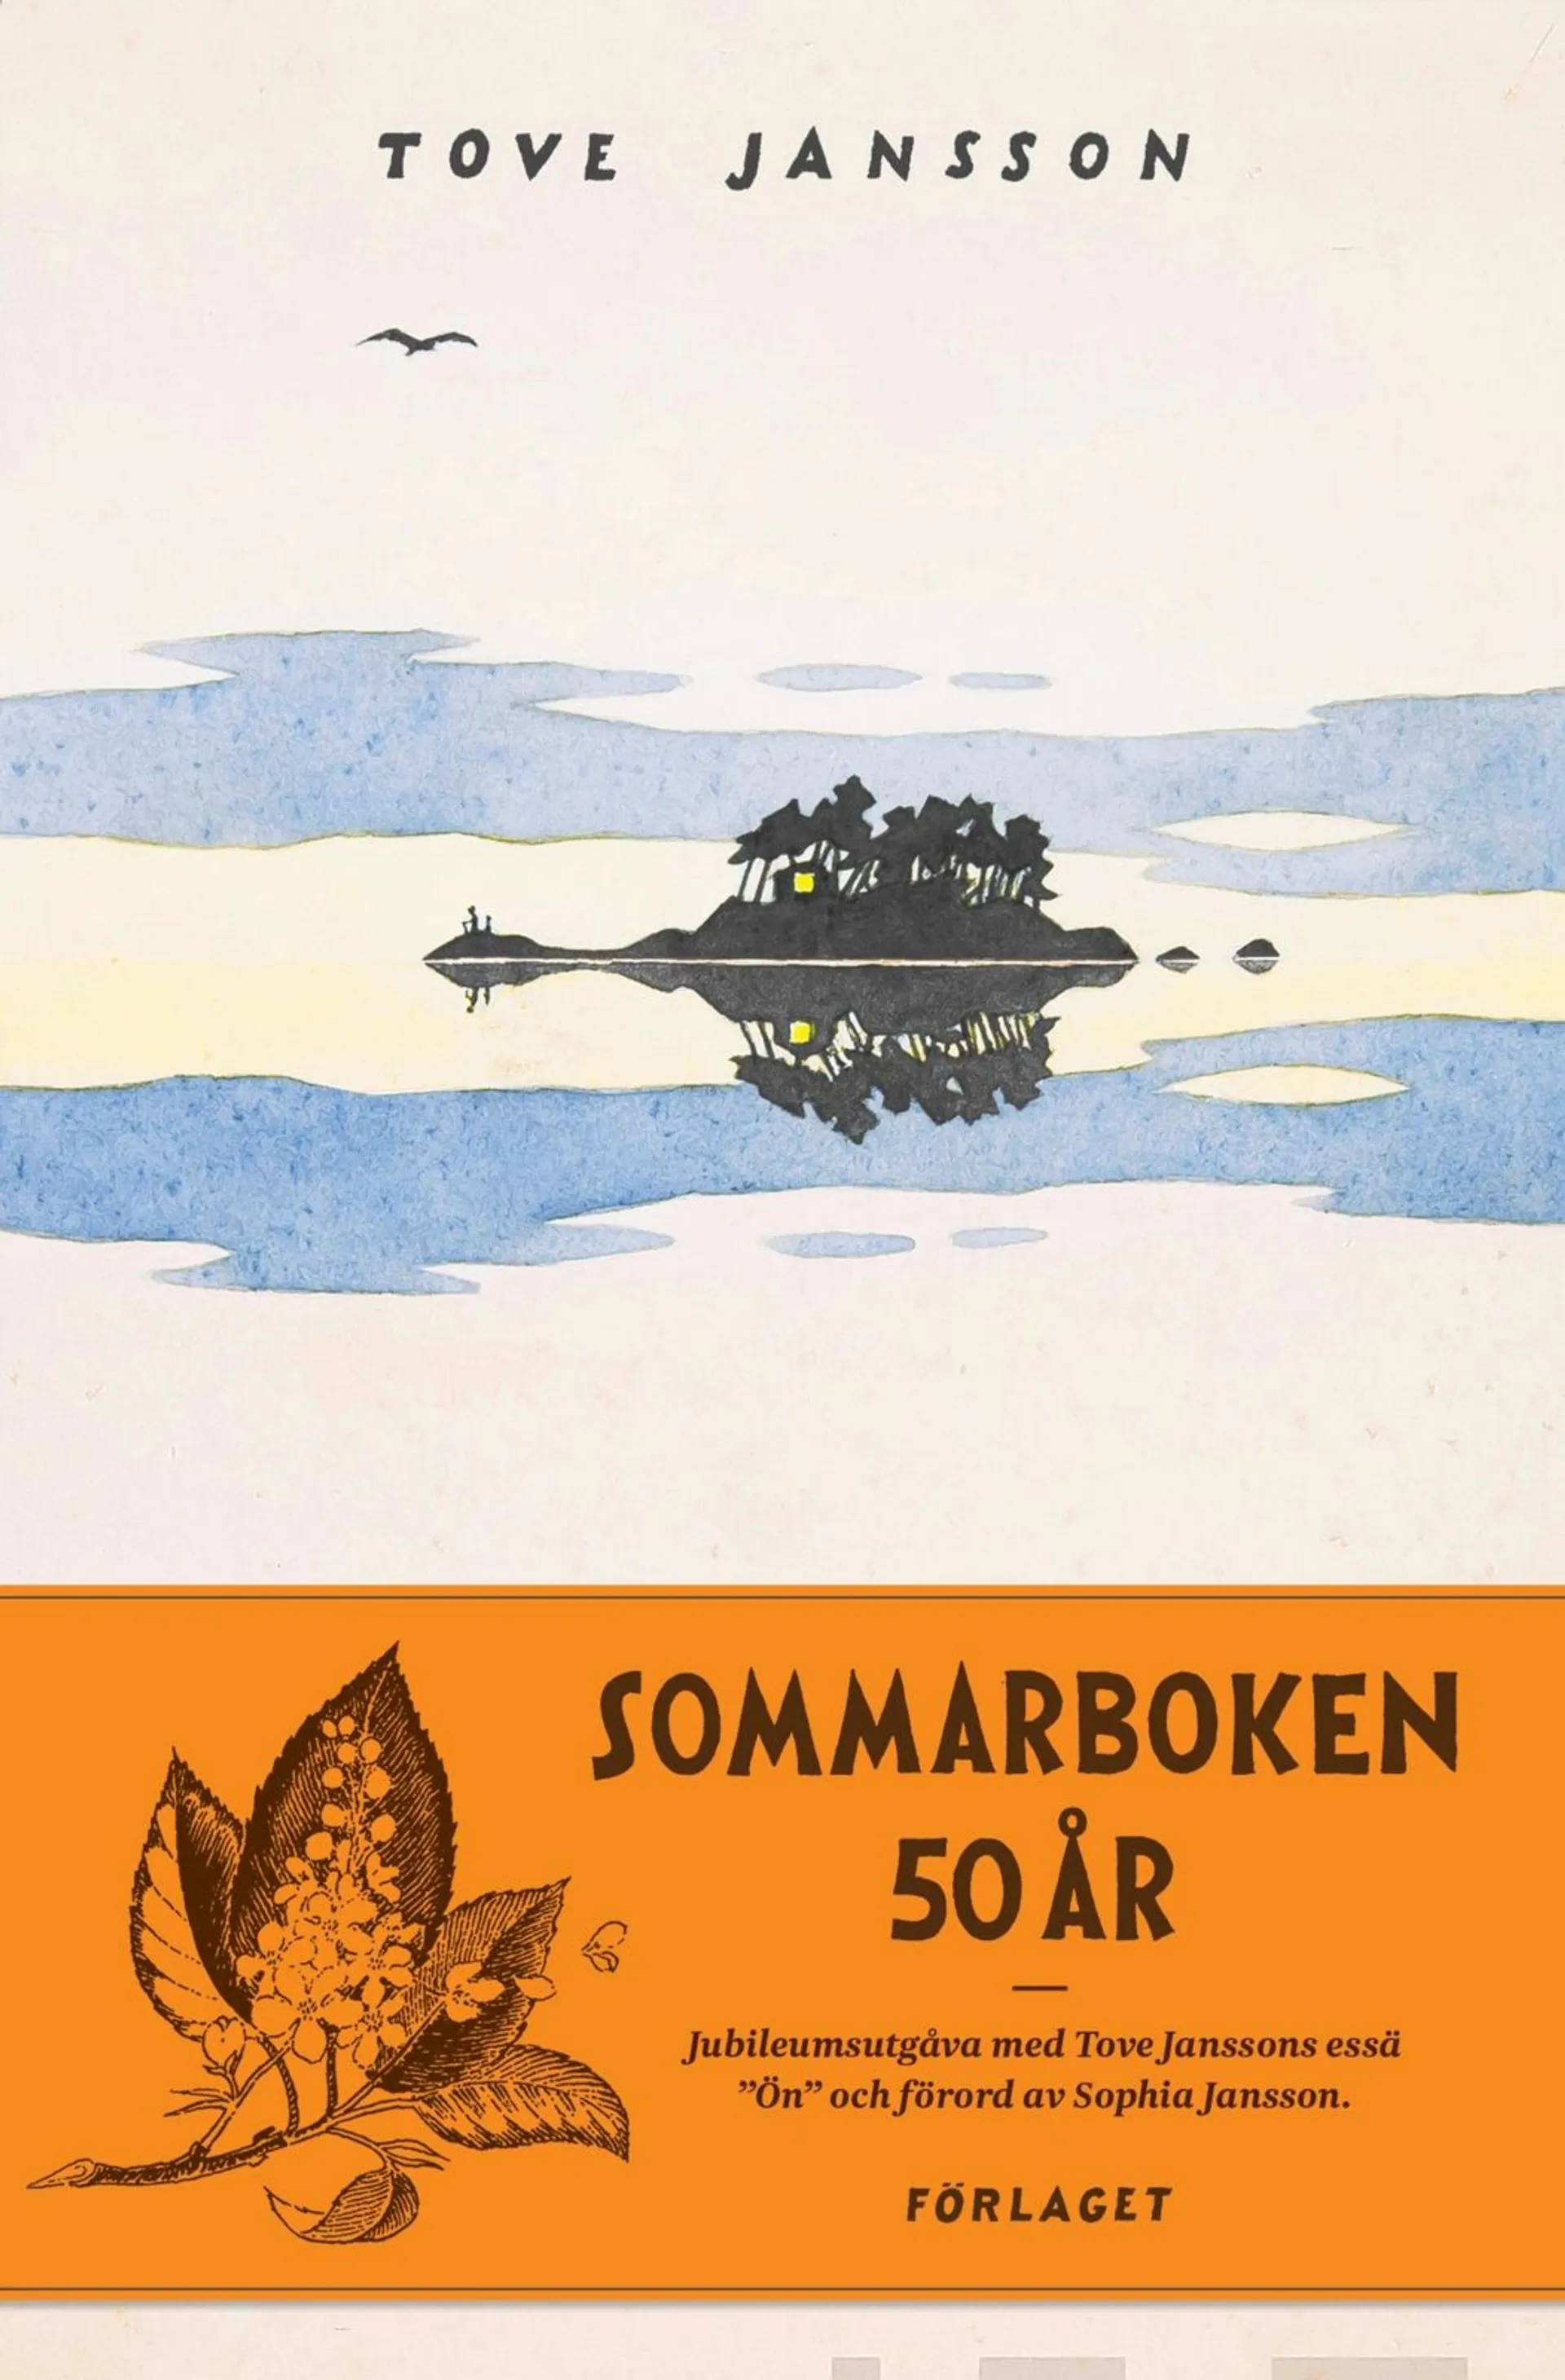 Jansson, Sommarboken